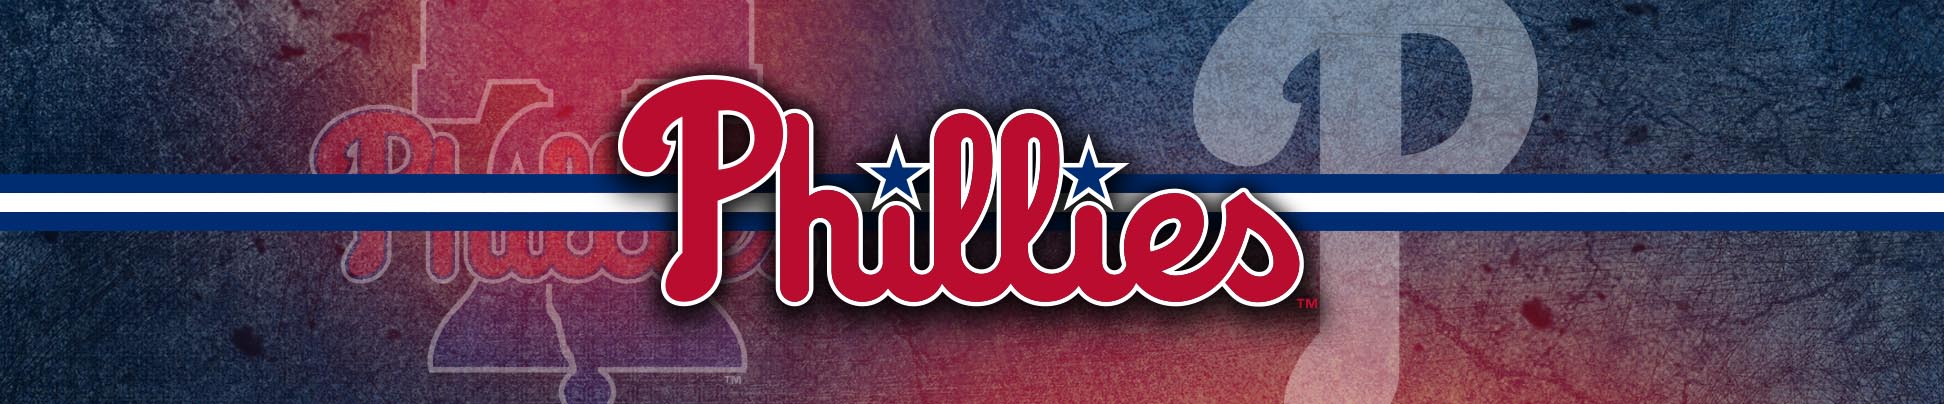 Philadelphia Phillies Memorabilia & Collectibles